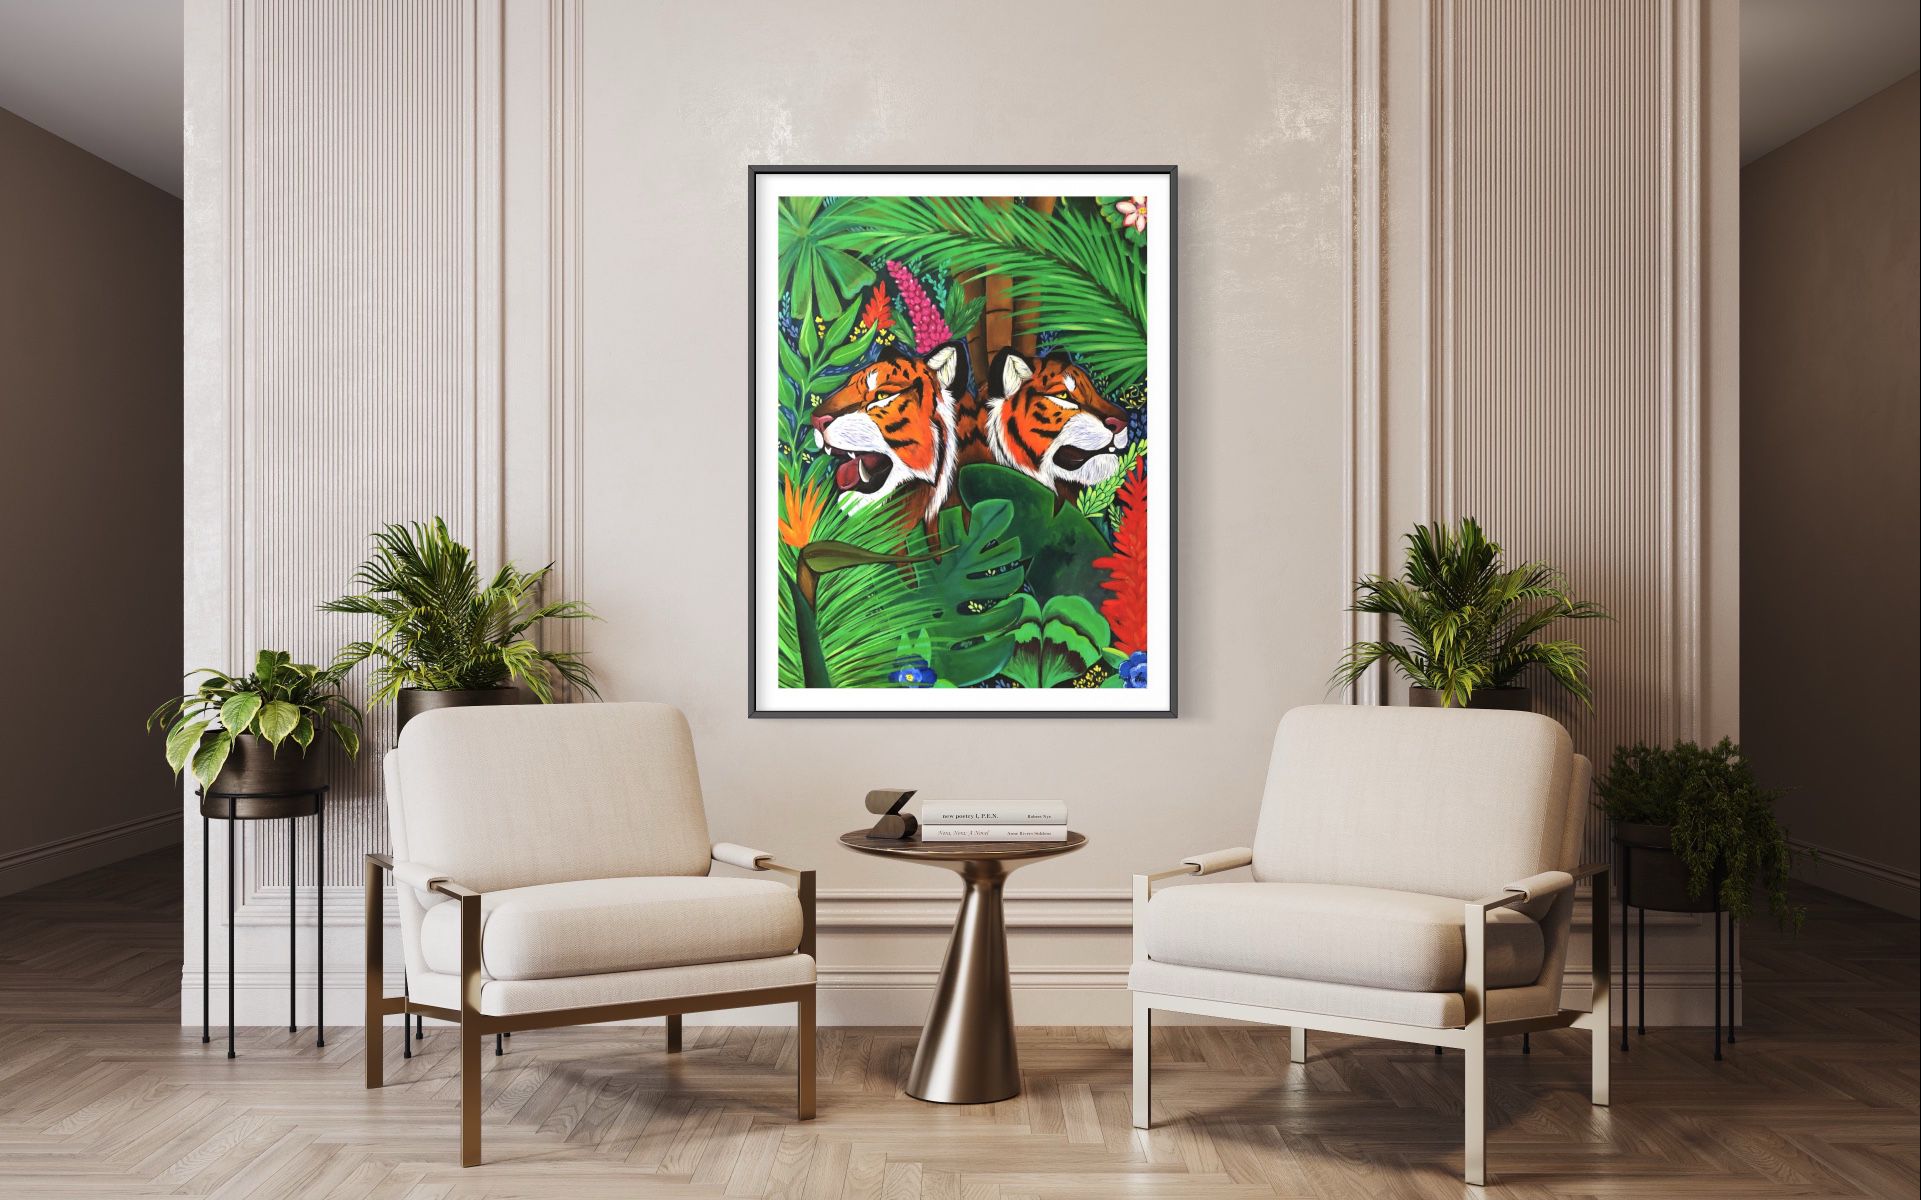 Acrylic Painting, Tigers, Original Painting, Acrylic Art, Artist,  Large Painting 